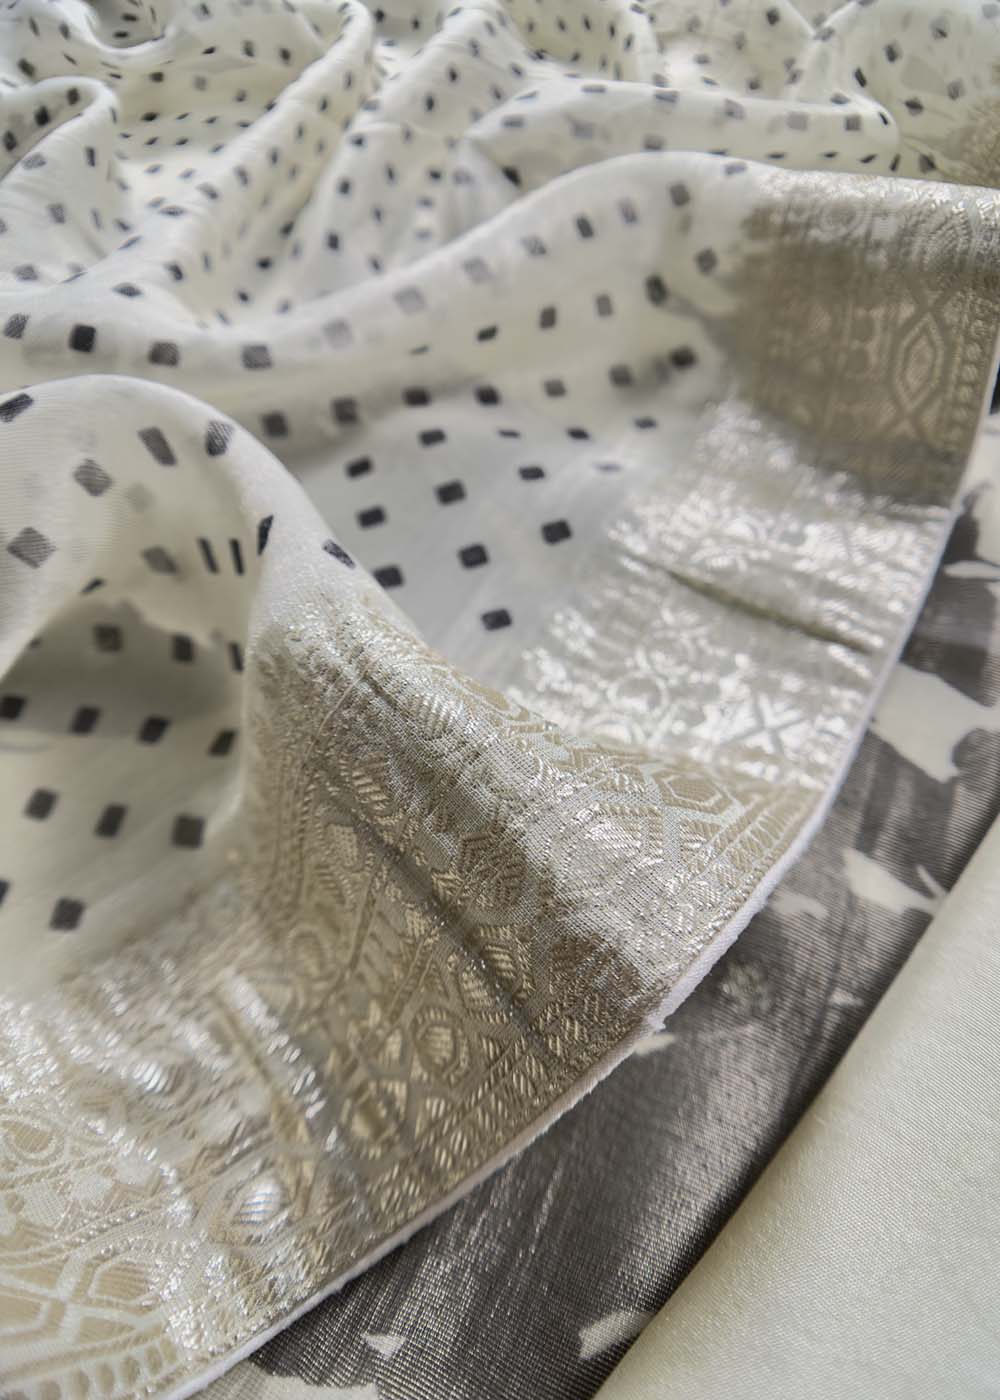 Mettalic Black And White Digital Print Tissue Silk Suit